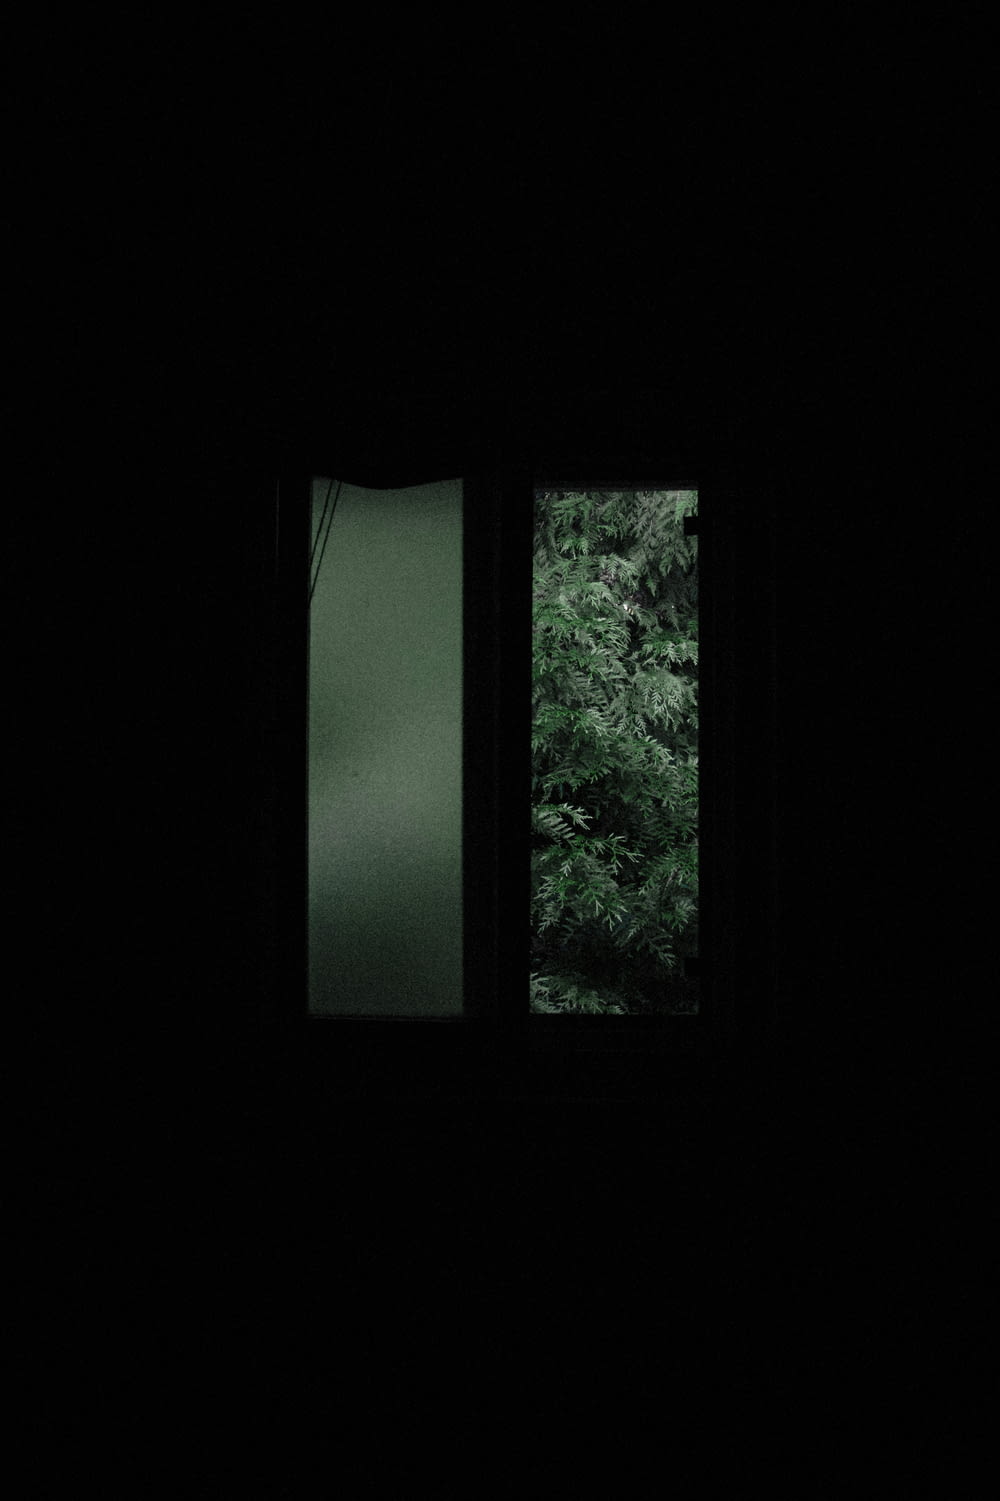 árboles verdes frente a la ventana